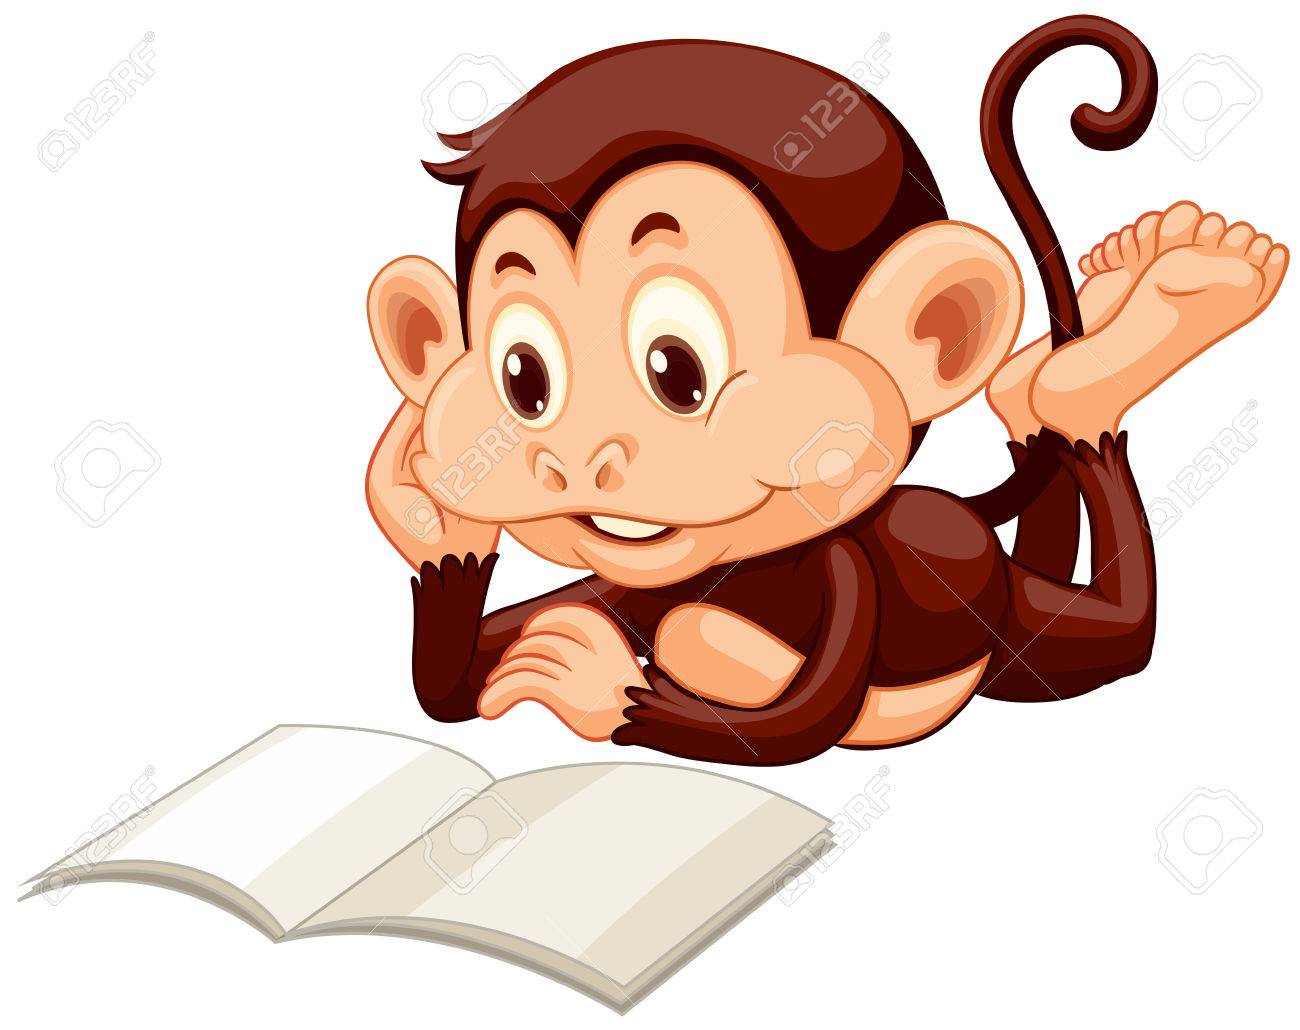 Little monkey reading a book illustration.